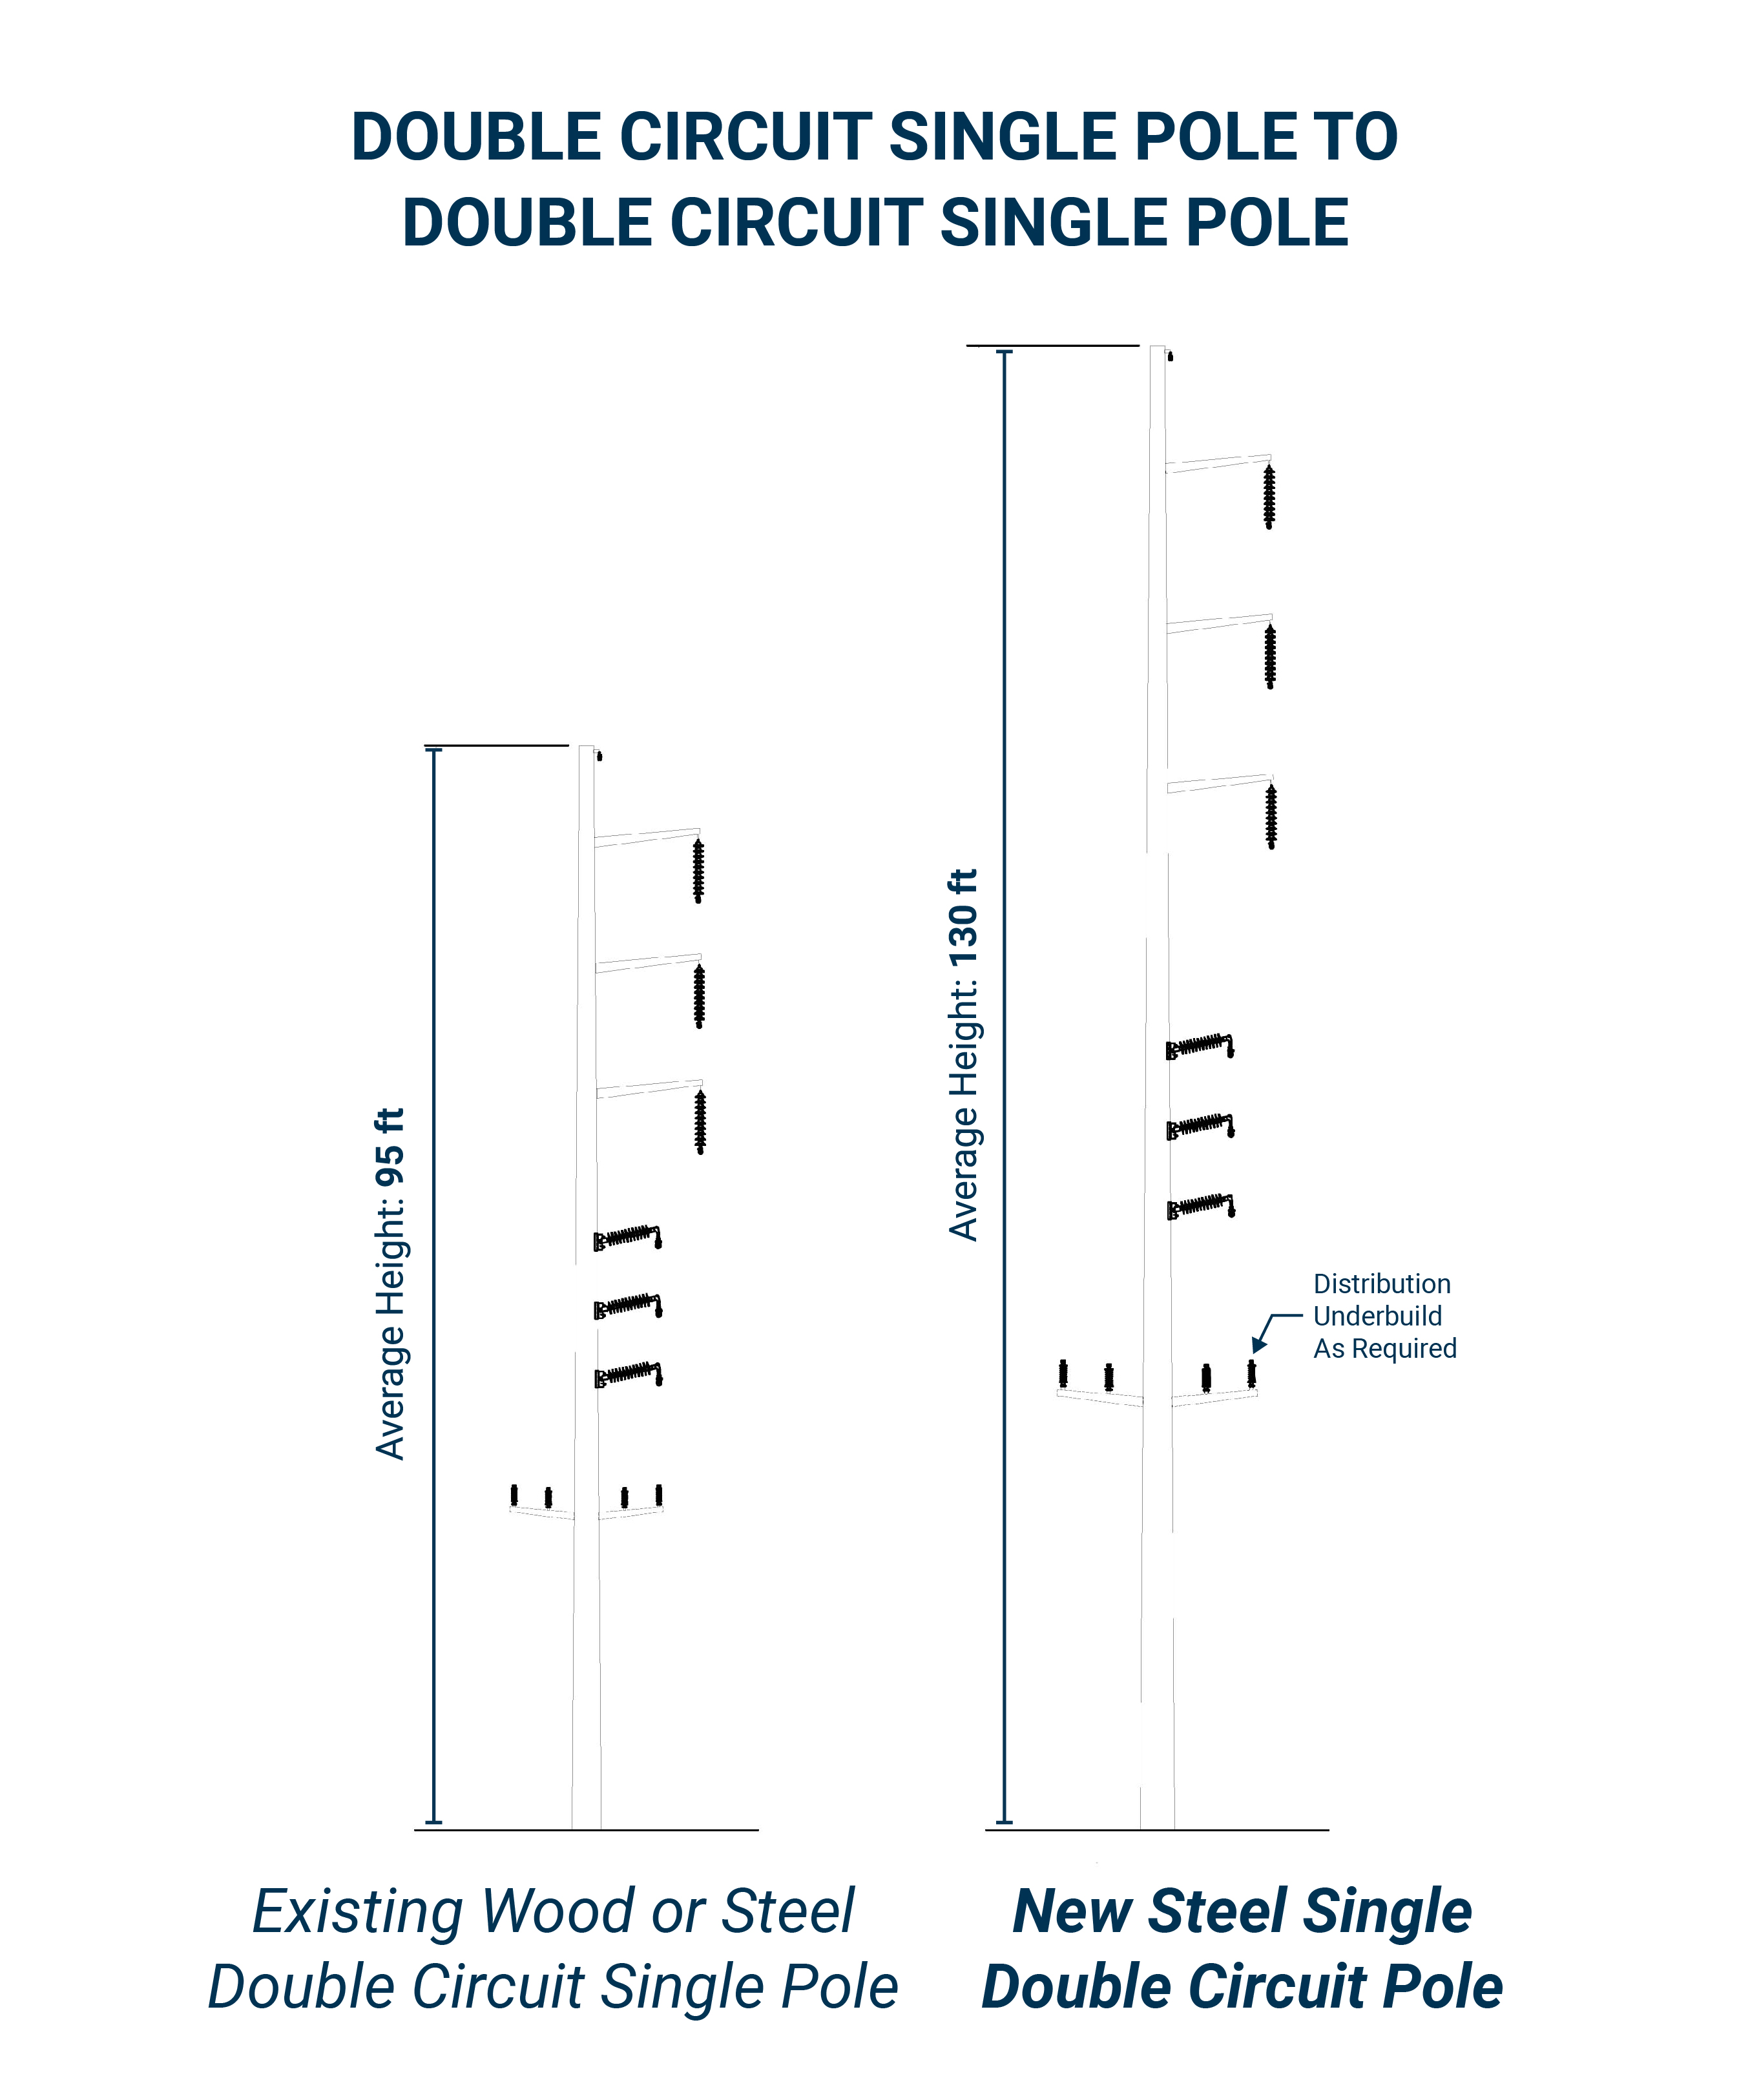 Diagram of current double circuit single pole to new steel single double circuit pole 